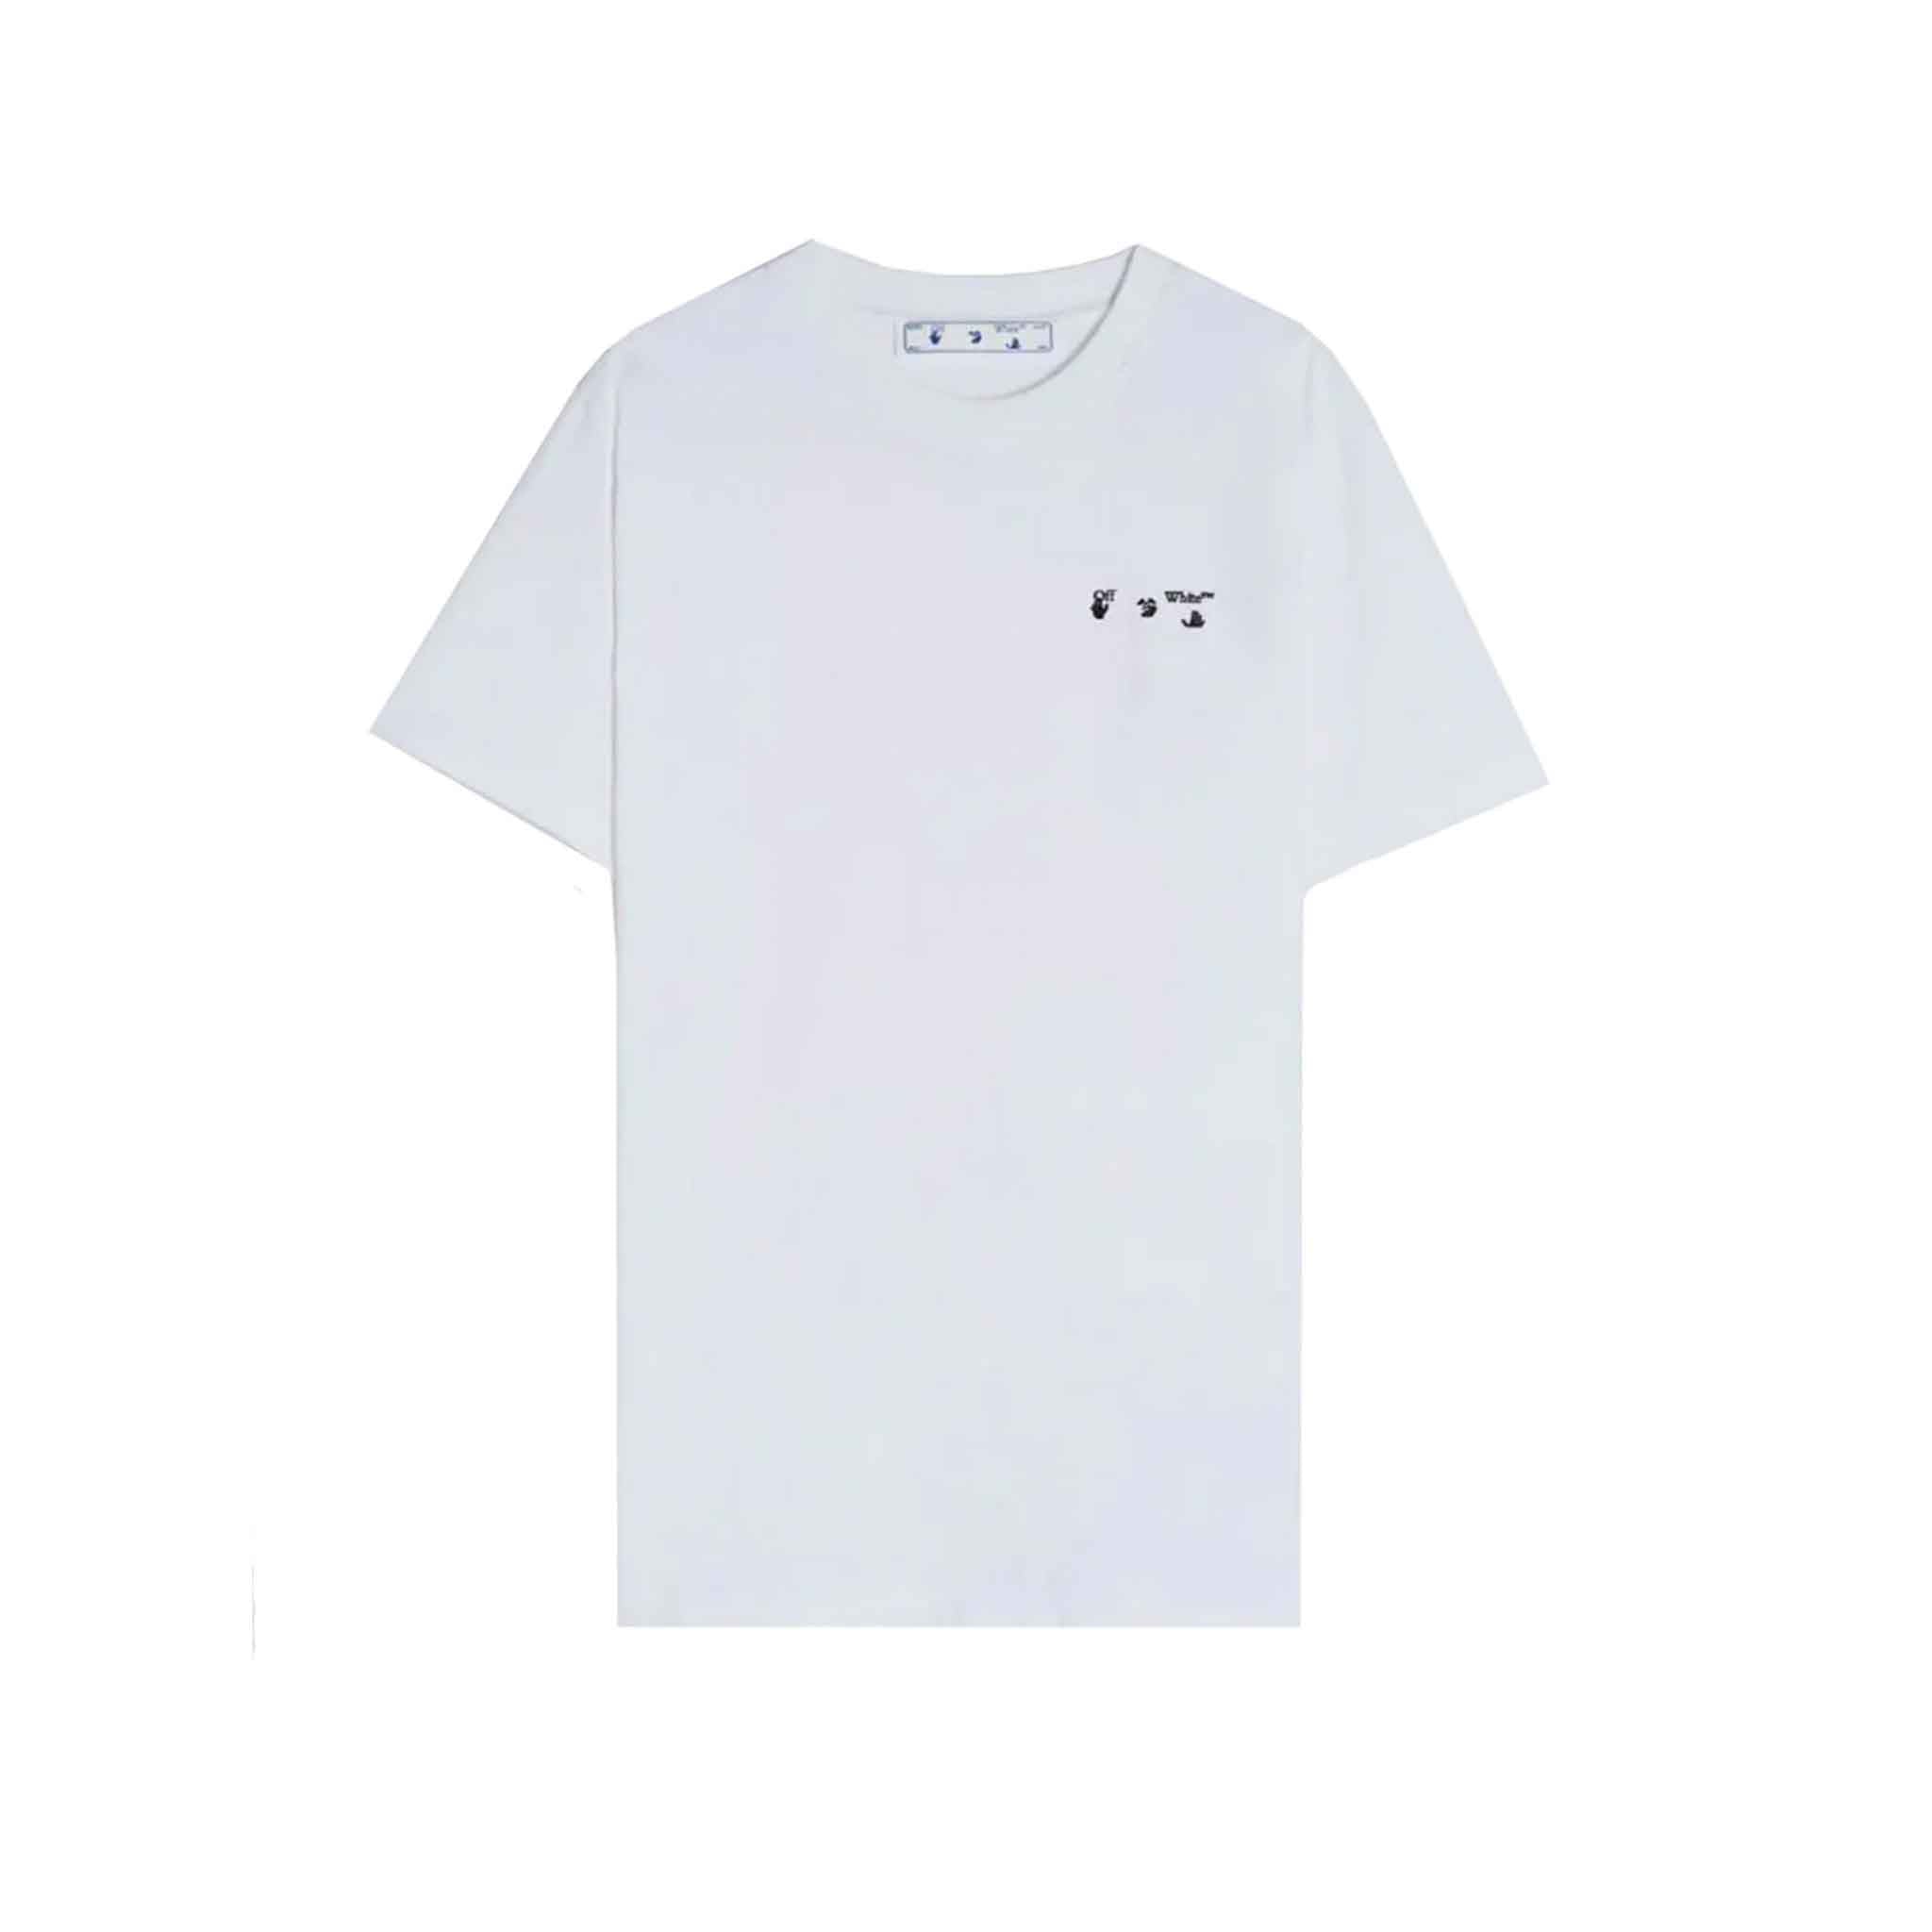 OFF-WHITE Big OW Logo Skate T-Shirt in White